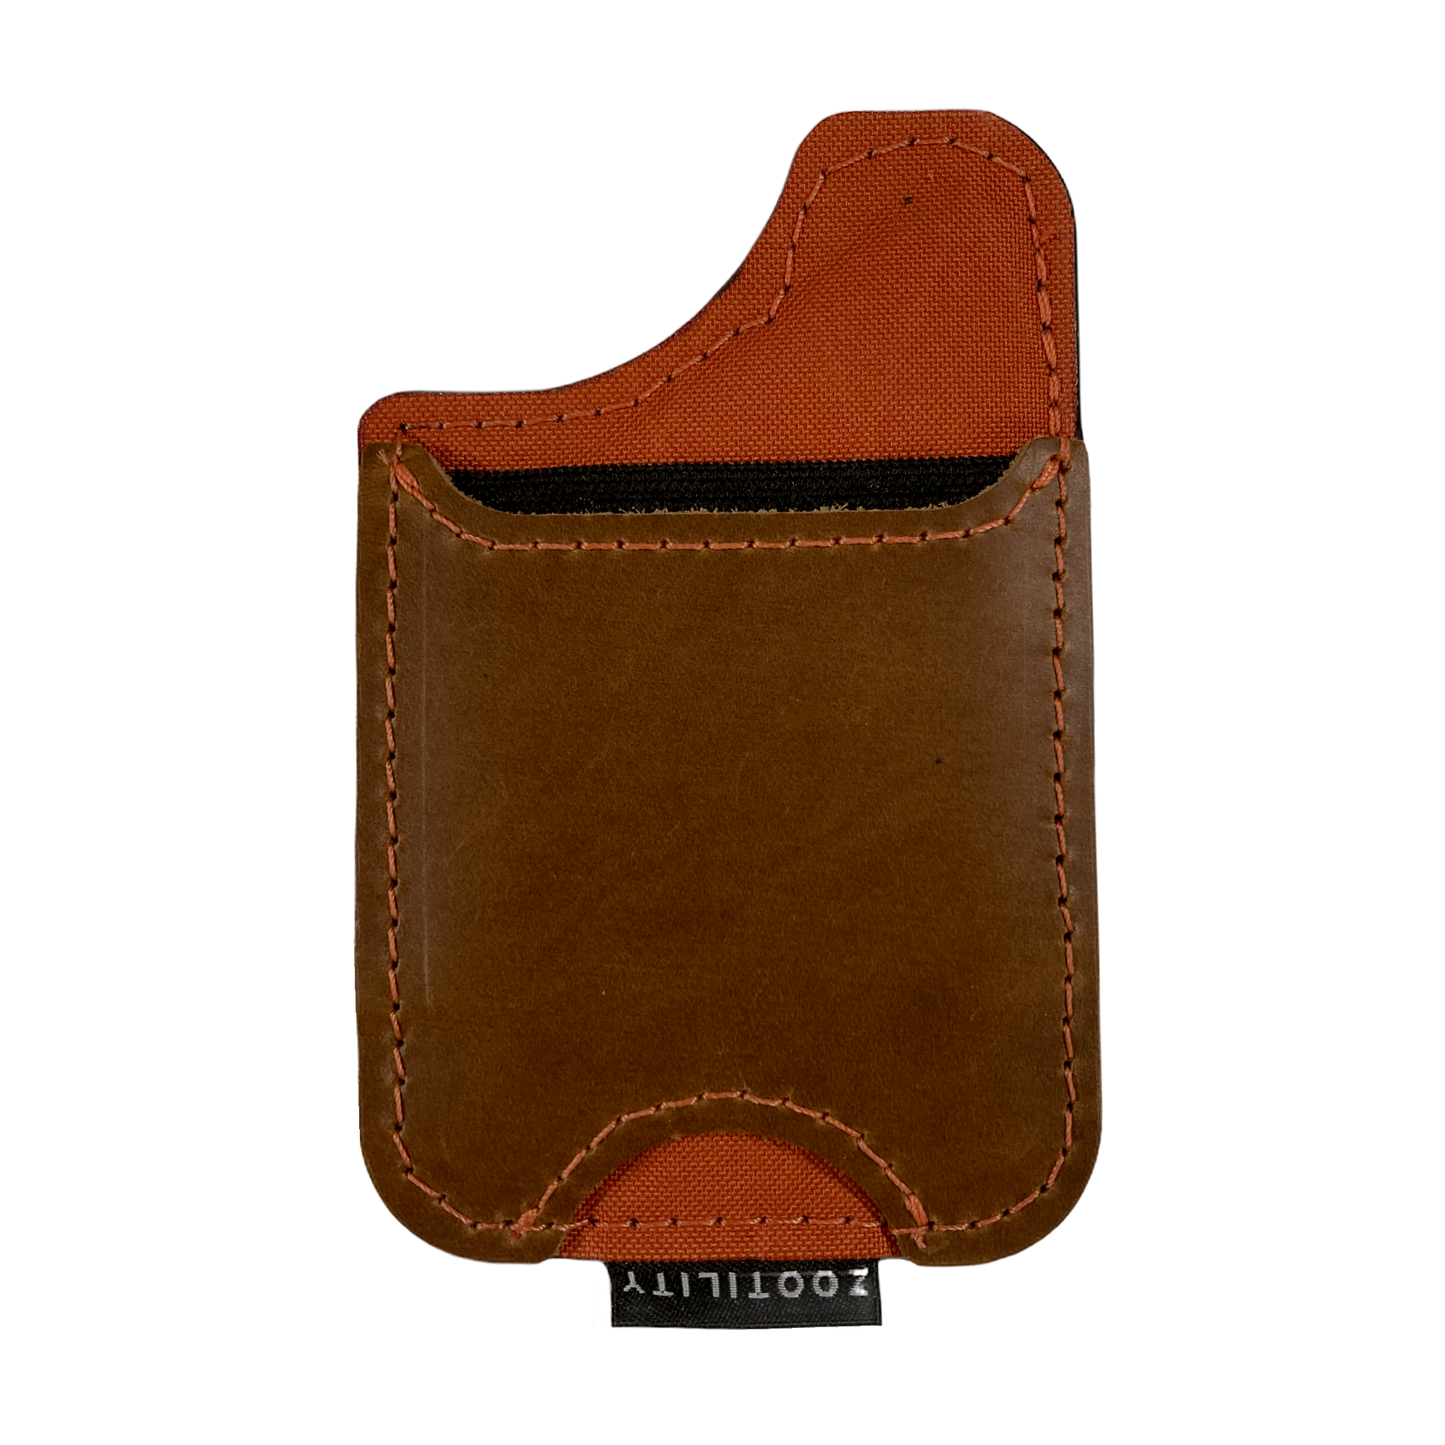 Custom Leather Phone Wallet